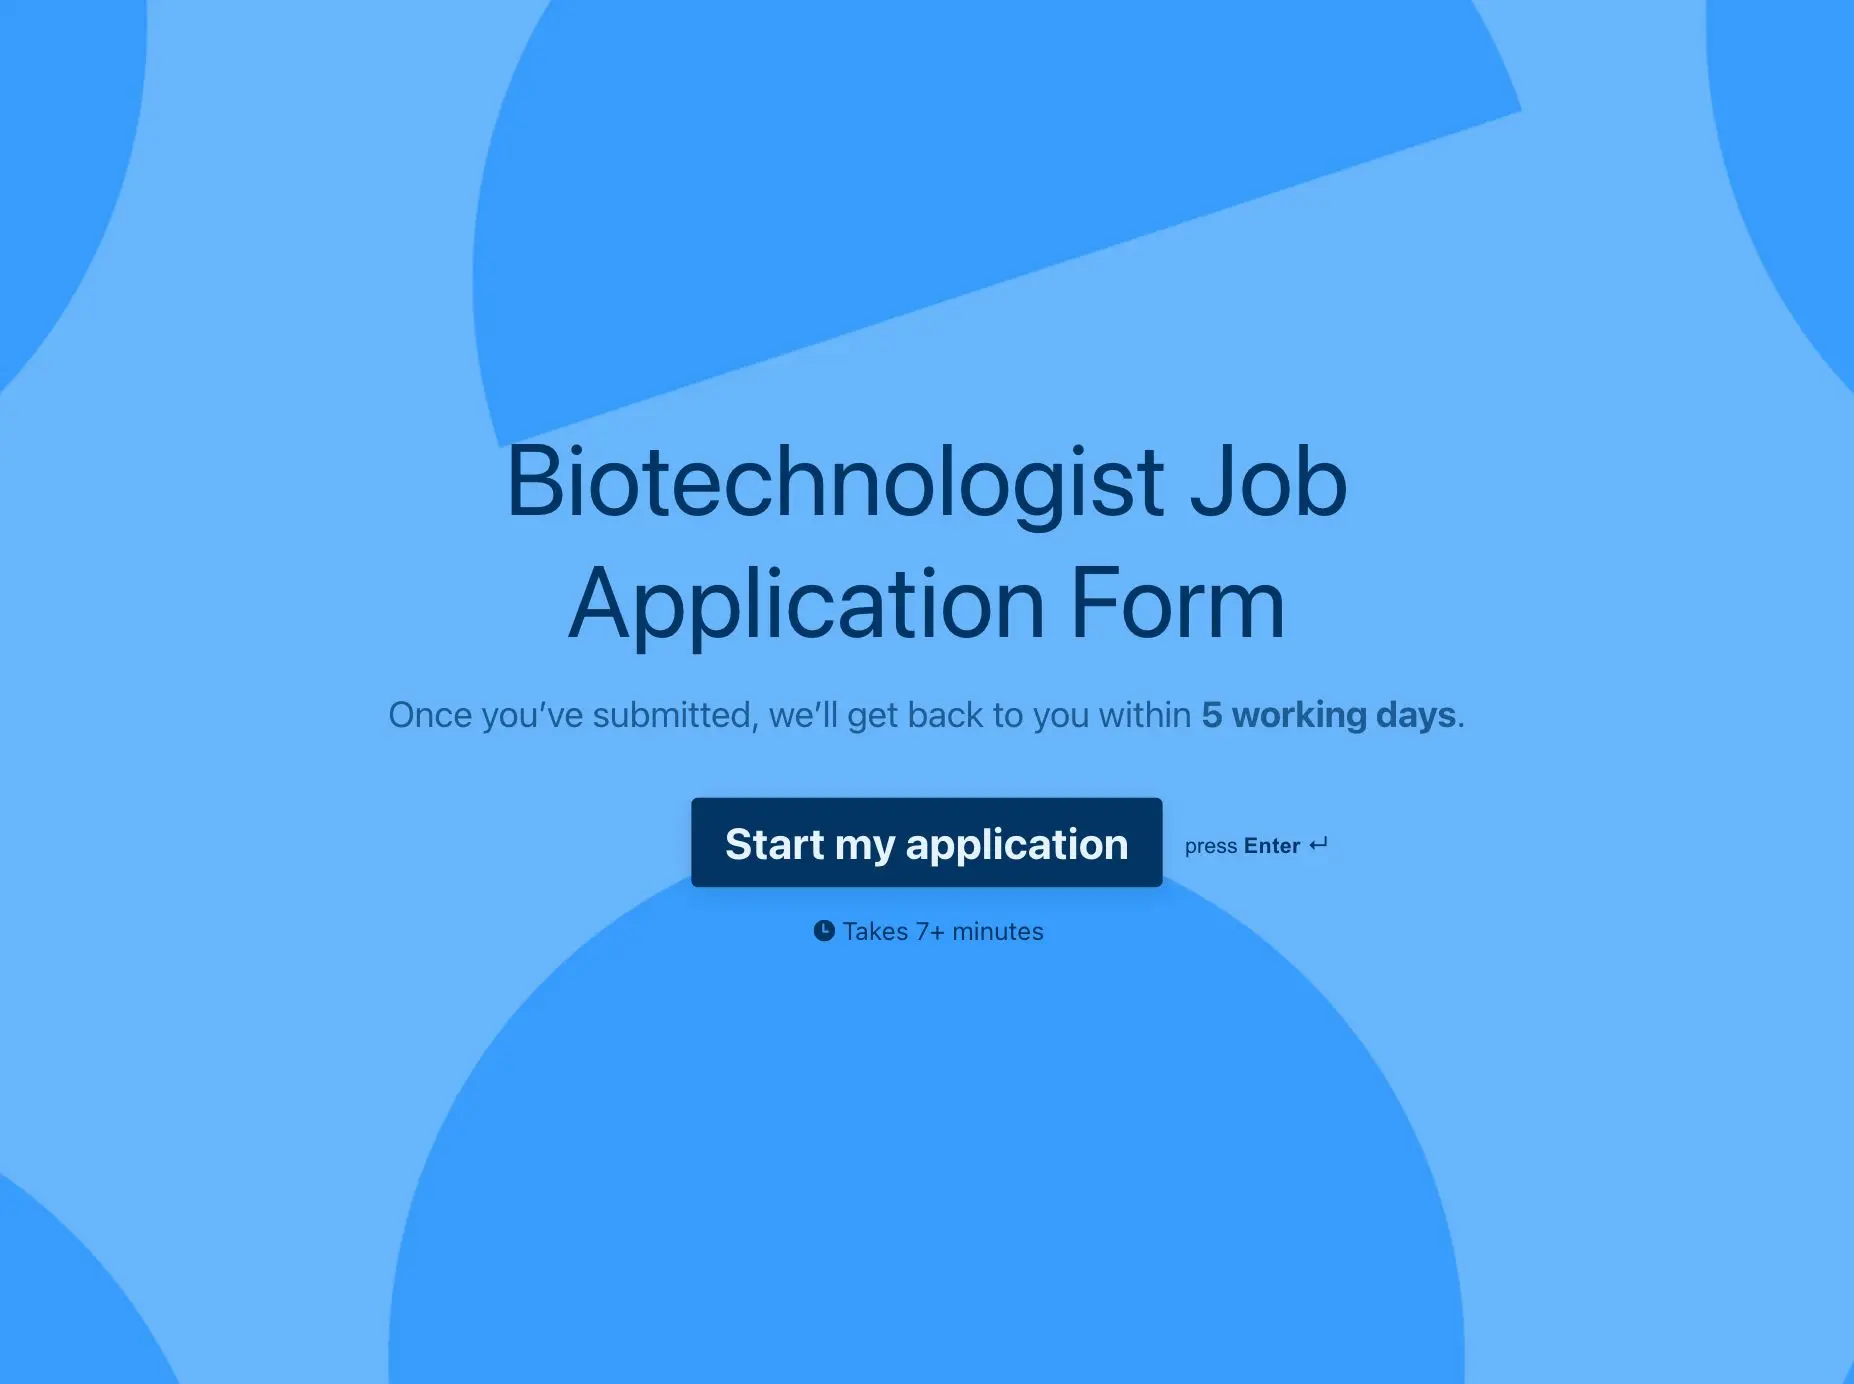 Biotechnologist Job Application Form Template Hero